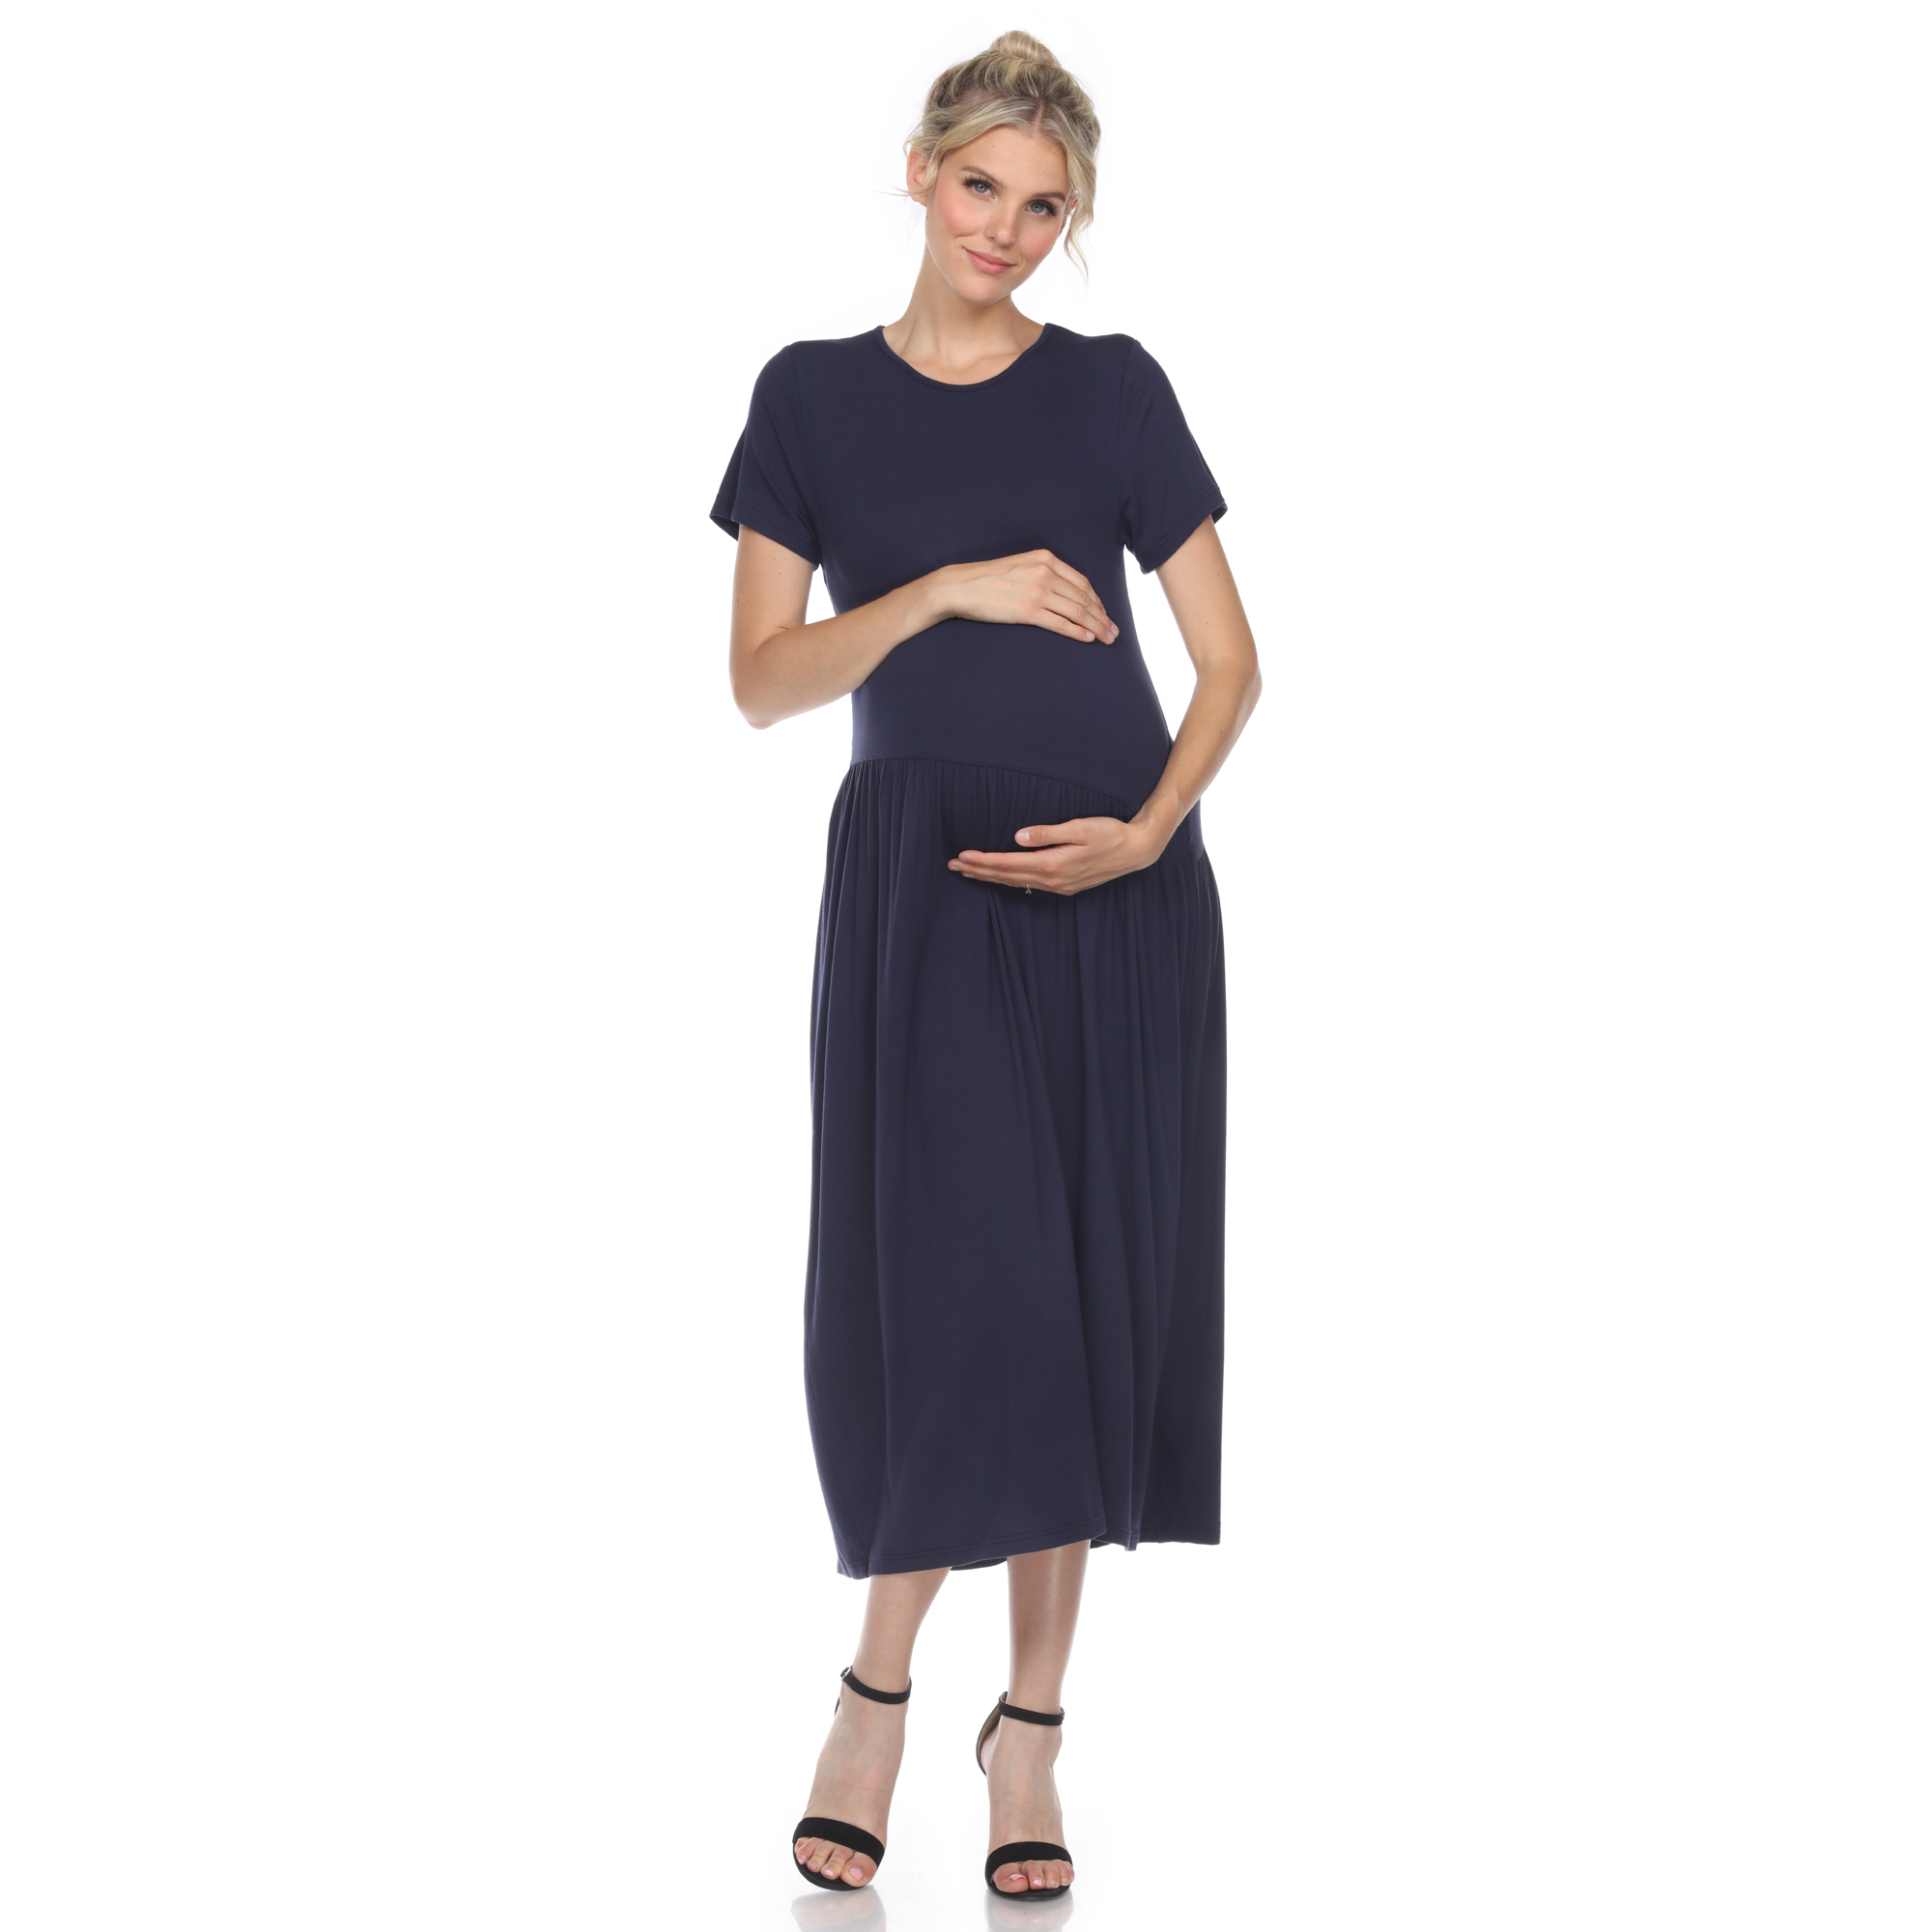 White Mark Womenâs Maternity Short Sleeve Maxi Dress - Navy, Large